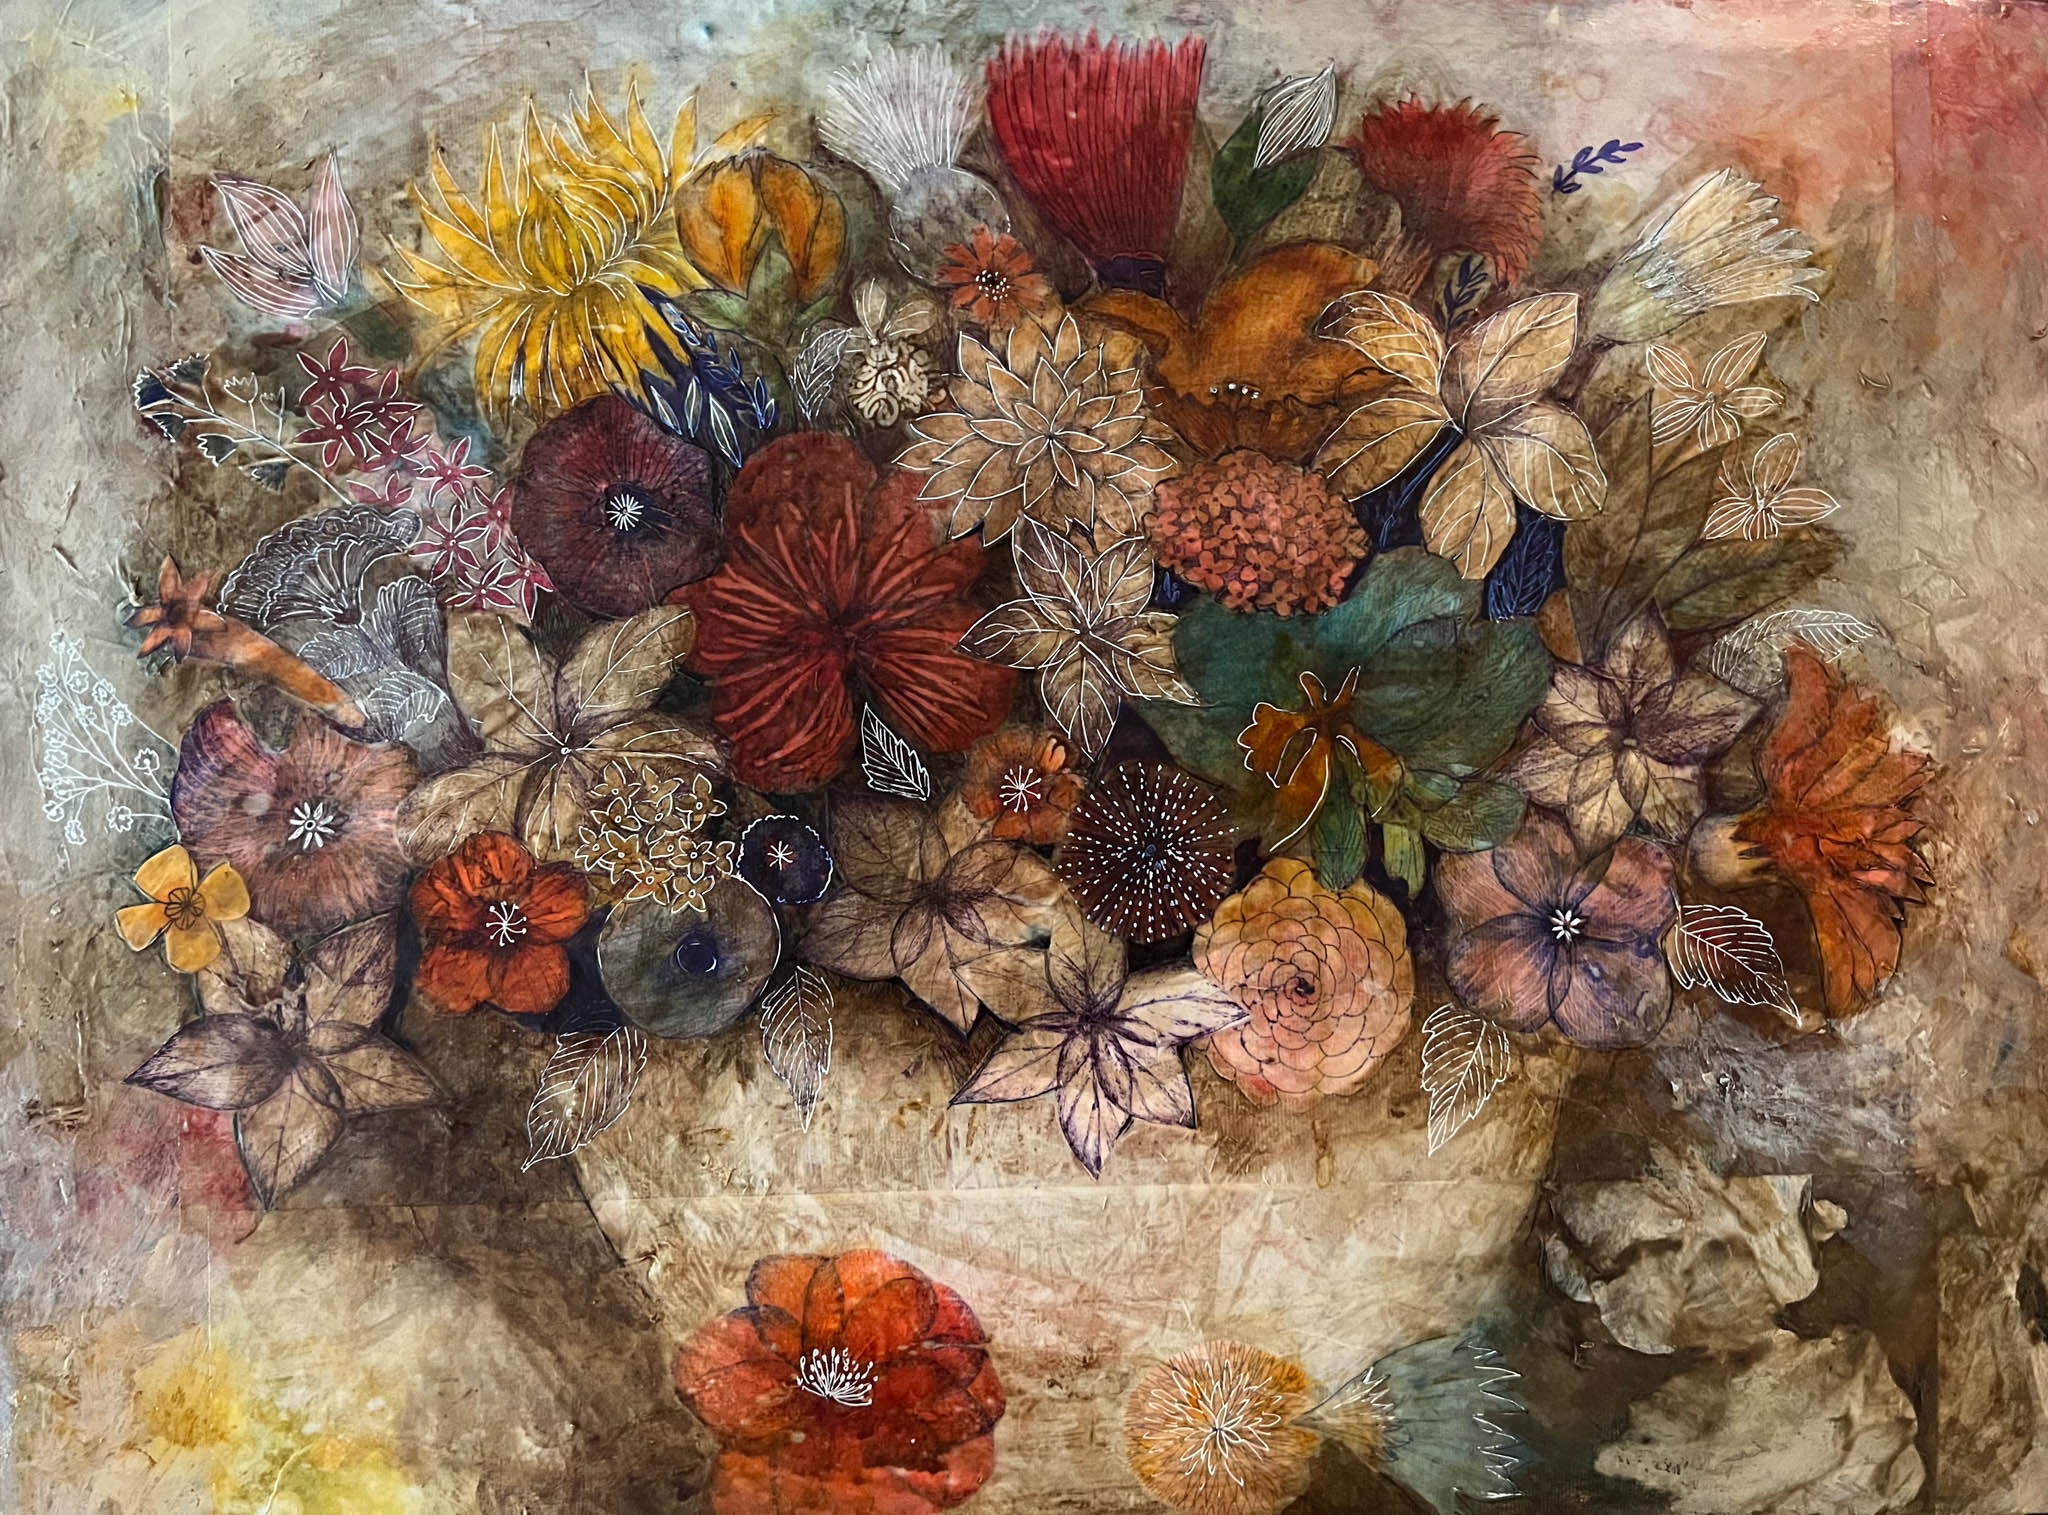 Laxmi Gupta’s art exhibition: The Flower Always Sheds Its Fragrance